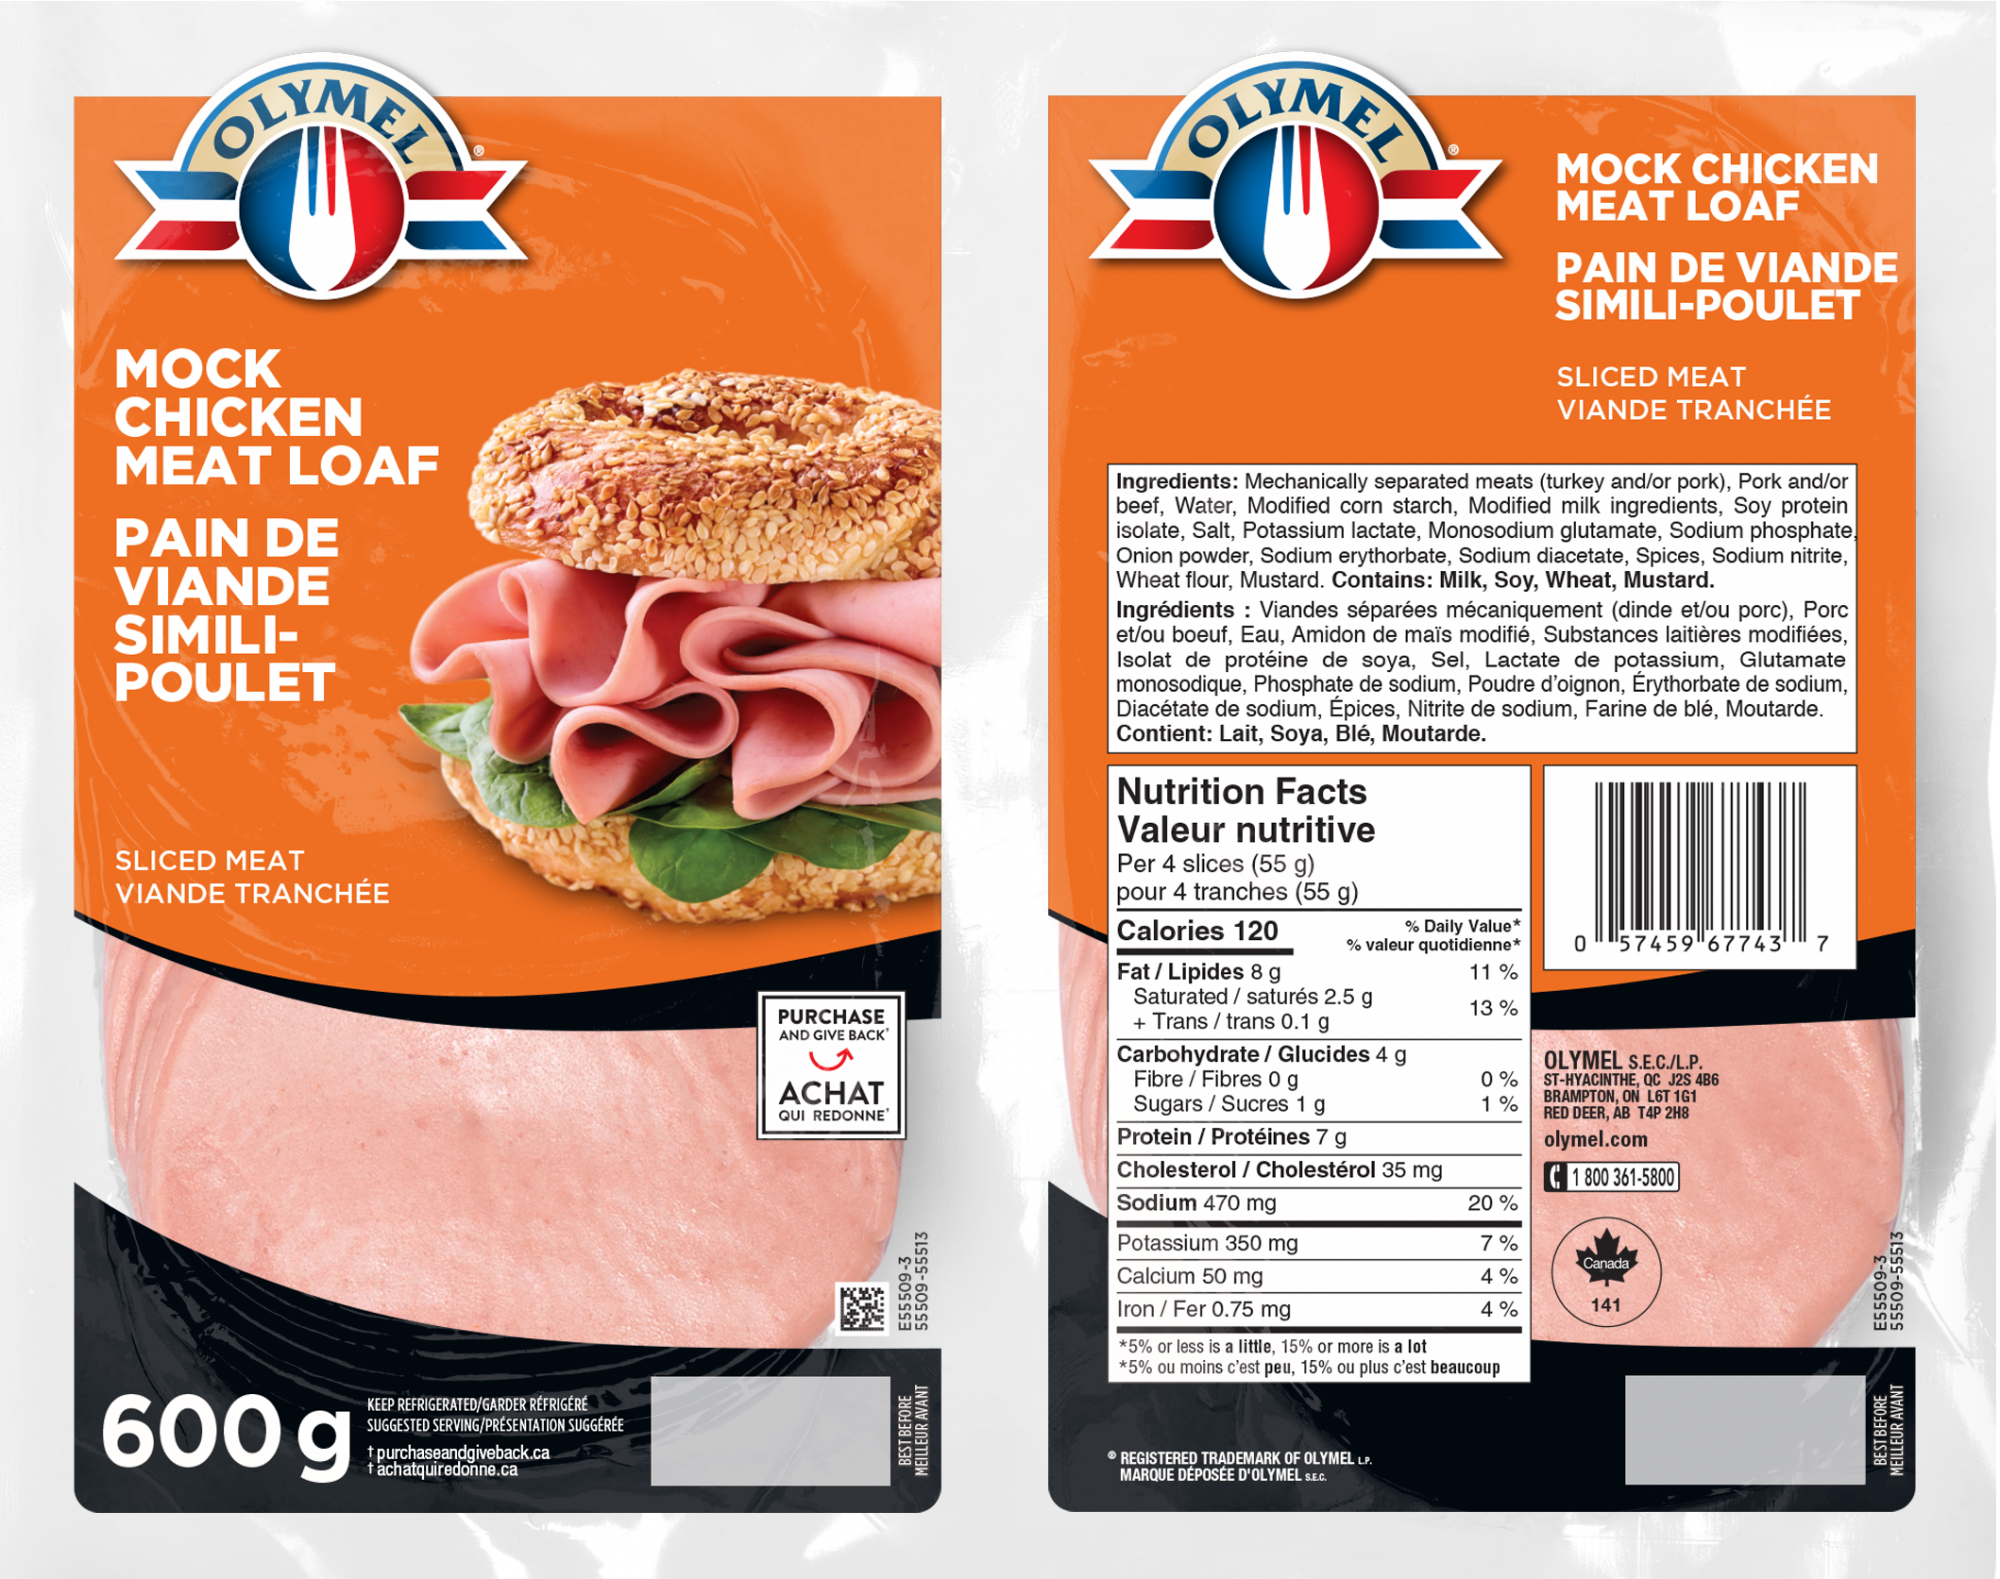 What is ham vs pork?